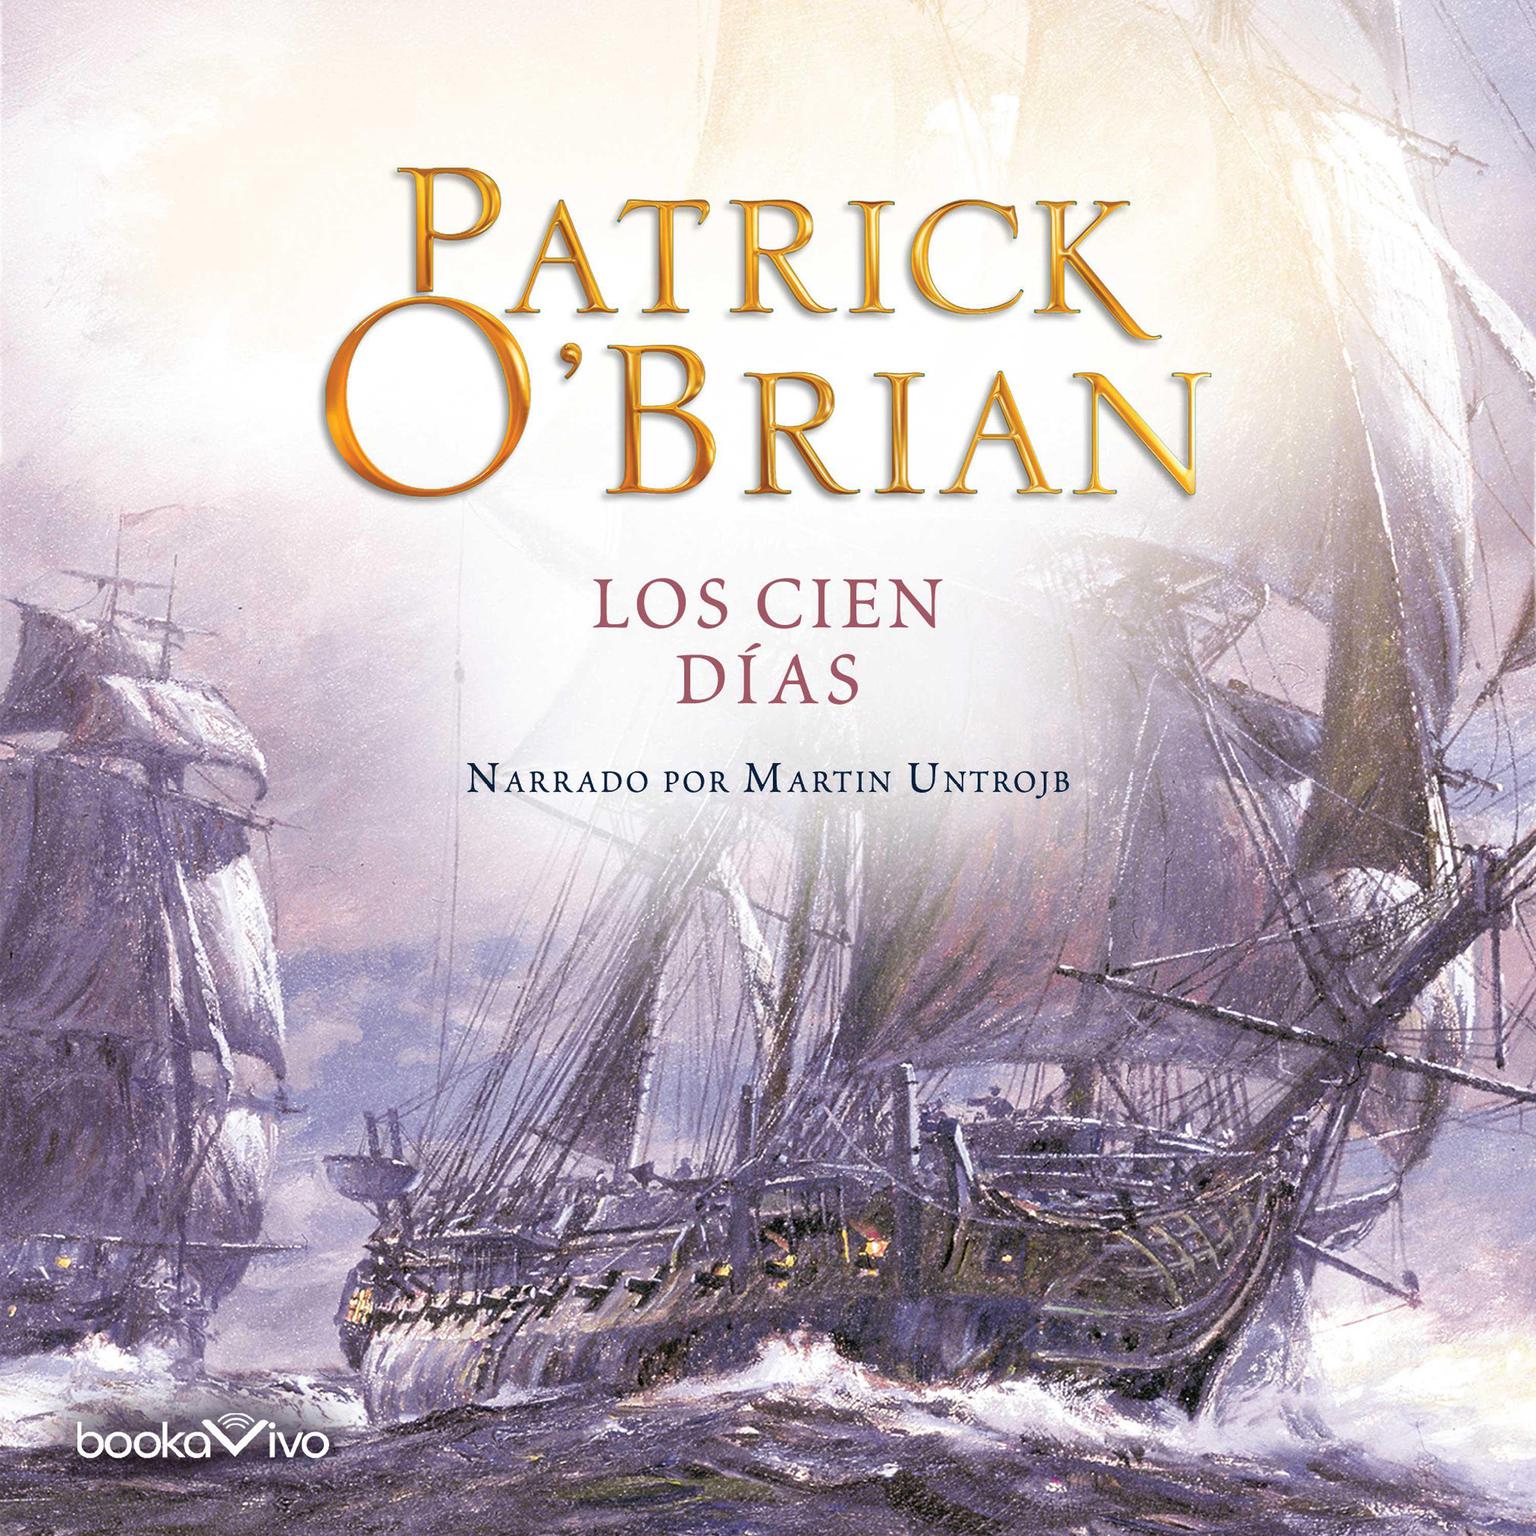 Los cien días (The Hundred Days) Audiobook, by Patrick O'Brian